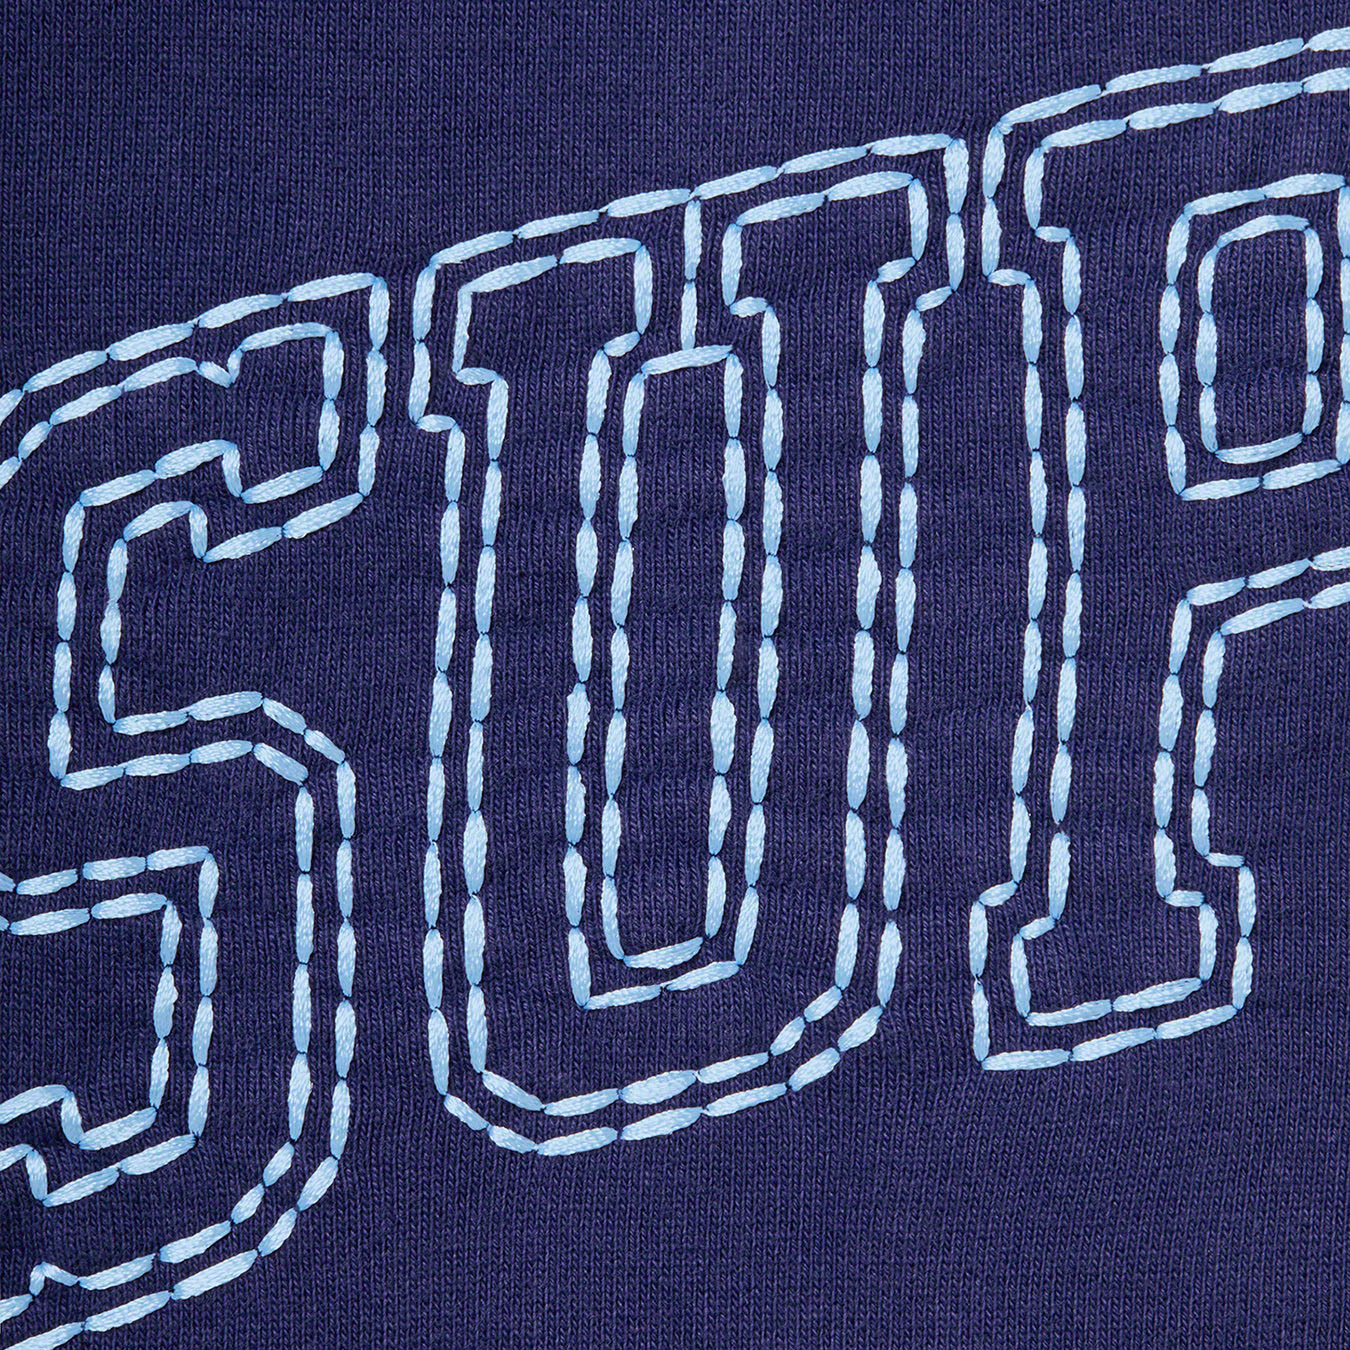 Supreme Big Stitch Hooded Sweatshirt